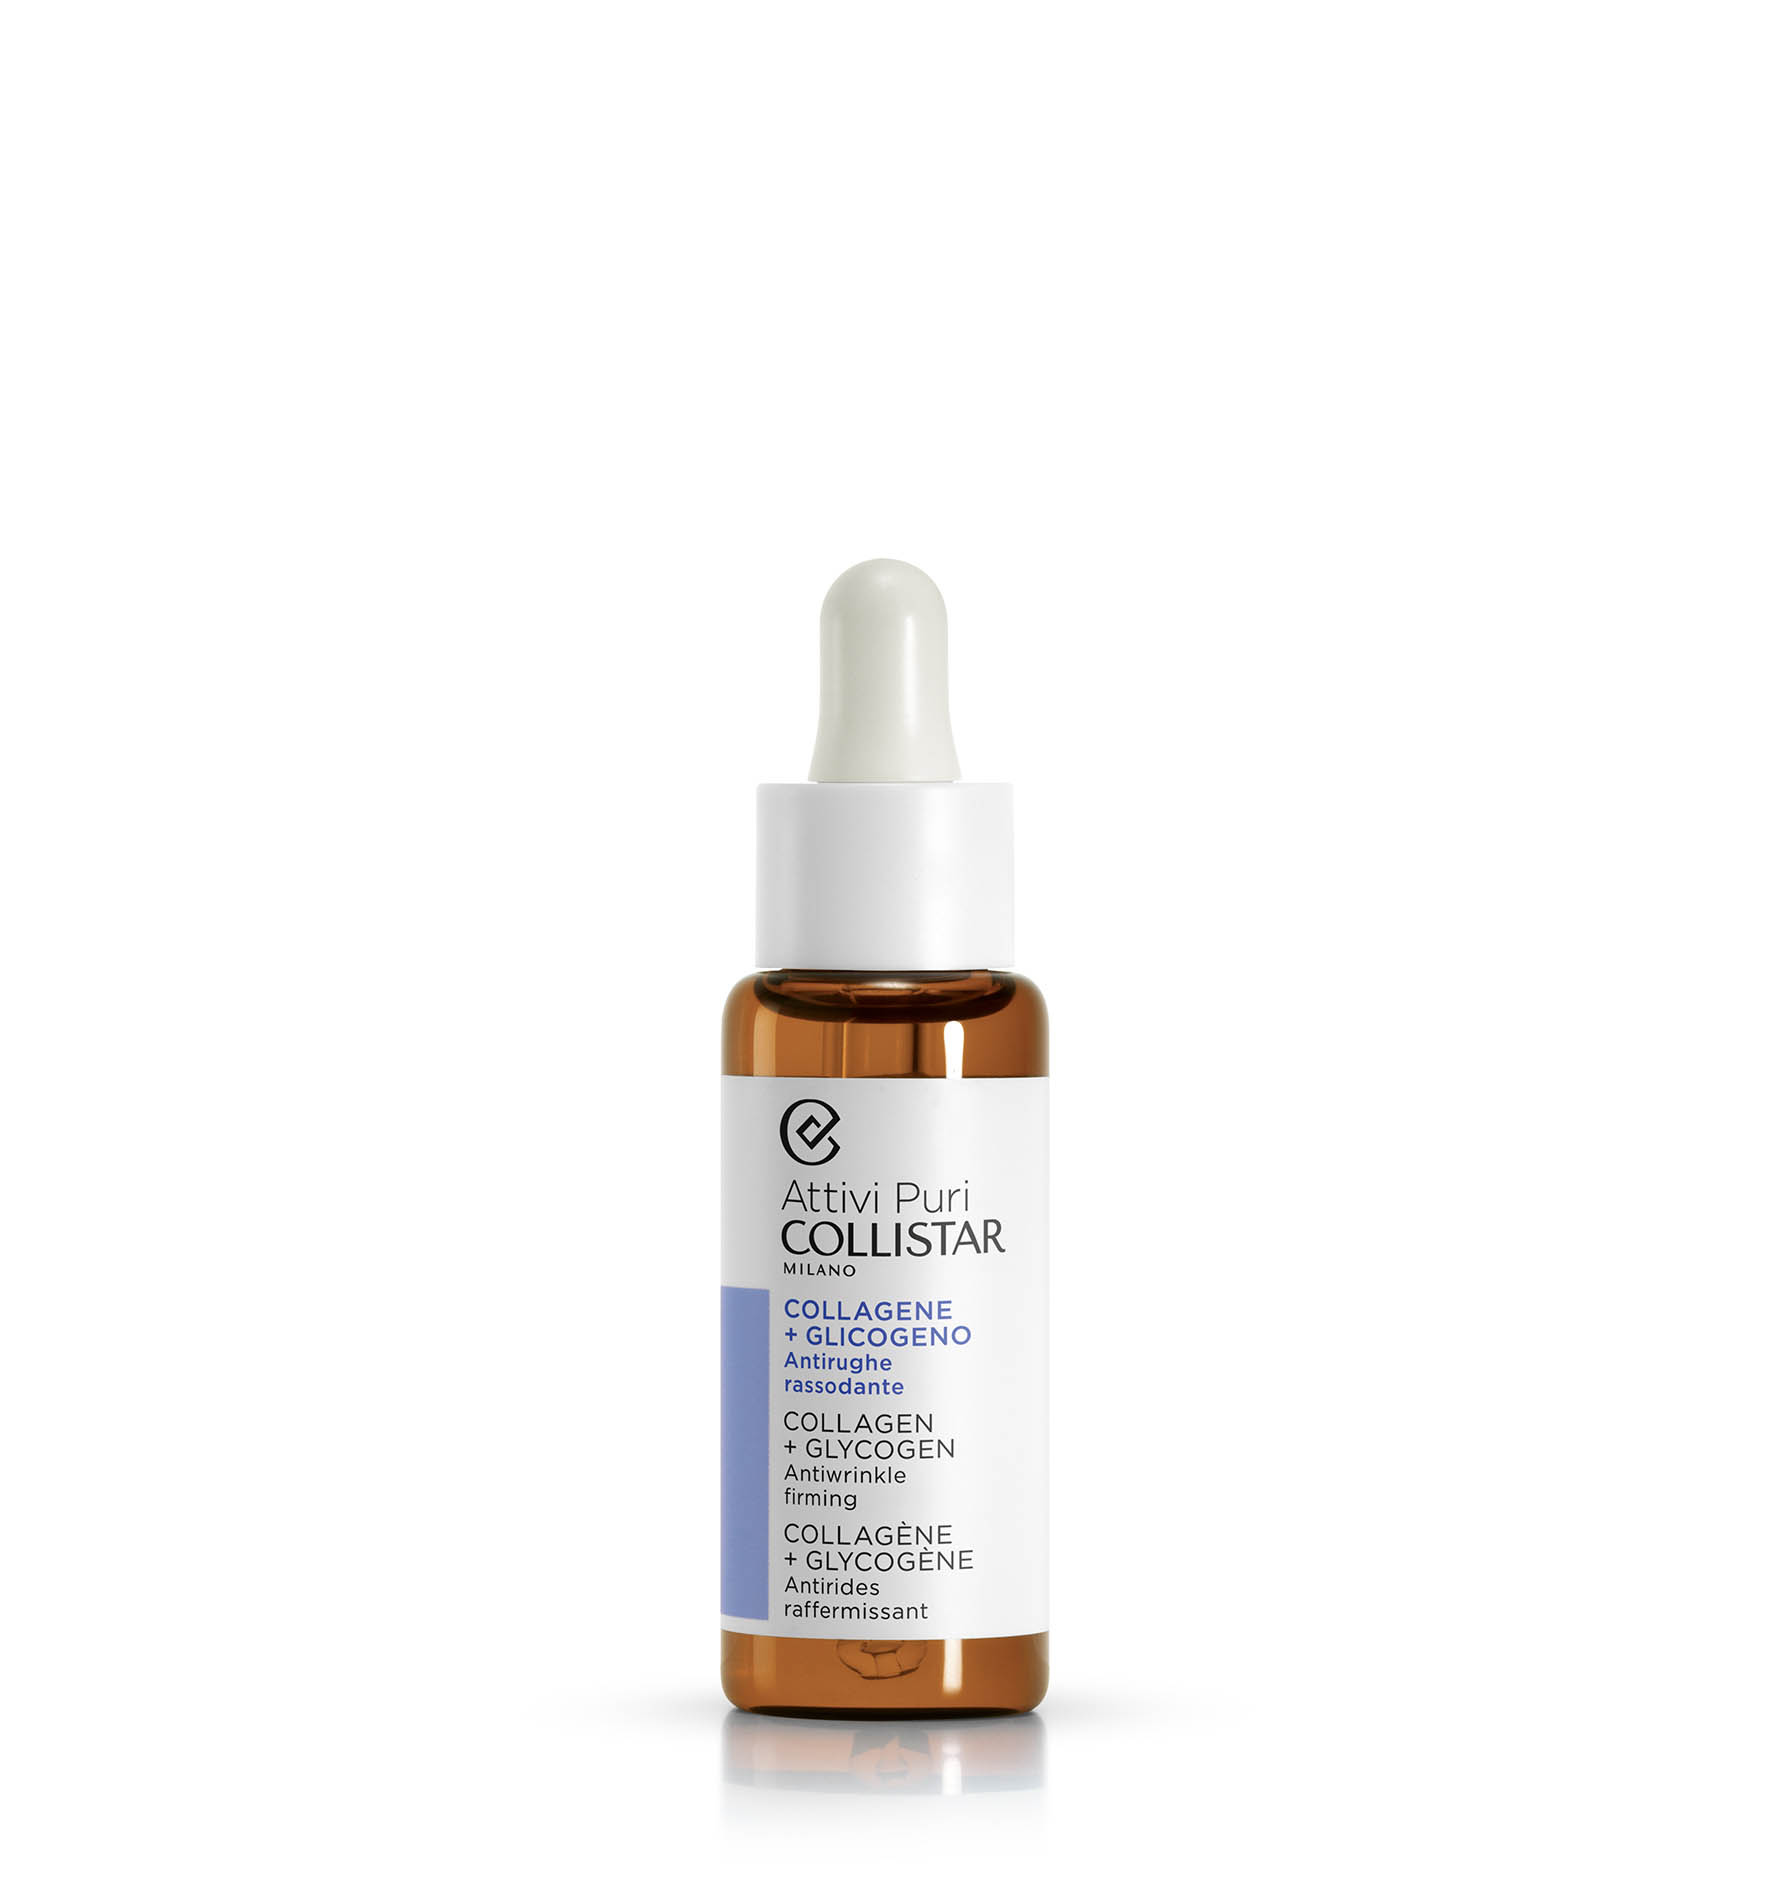 ATTIVI PURI COLLAGEN + GLYCOGEN - Collagene | Collistar - Shop Online Ufficiale